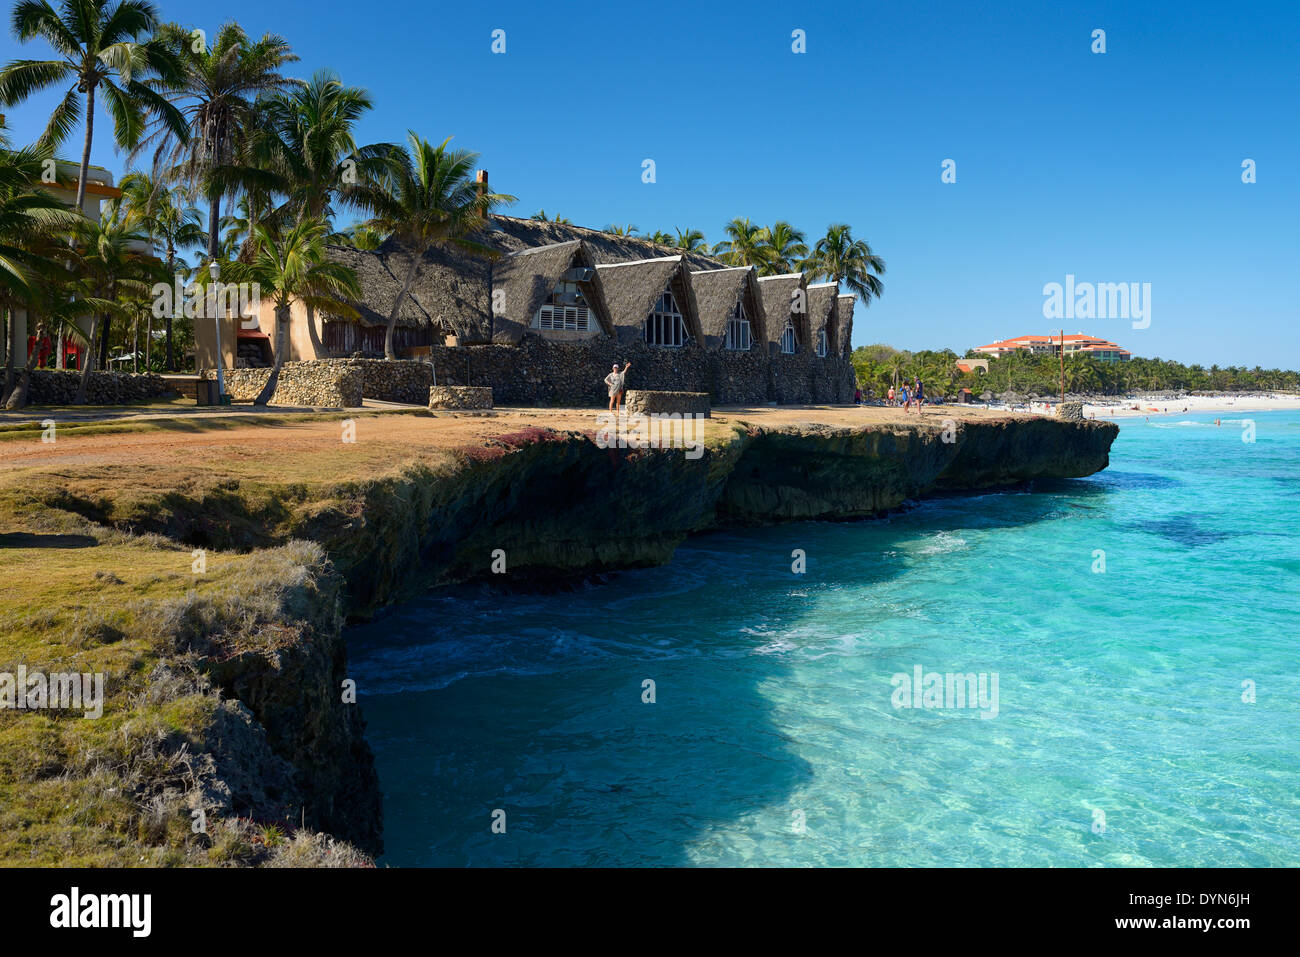 Lava rock shore and white sand beach and turquoise water at Varadero Cuba resort hotel Bay of Cardenas Atlantic ocean Stock Photo